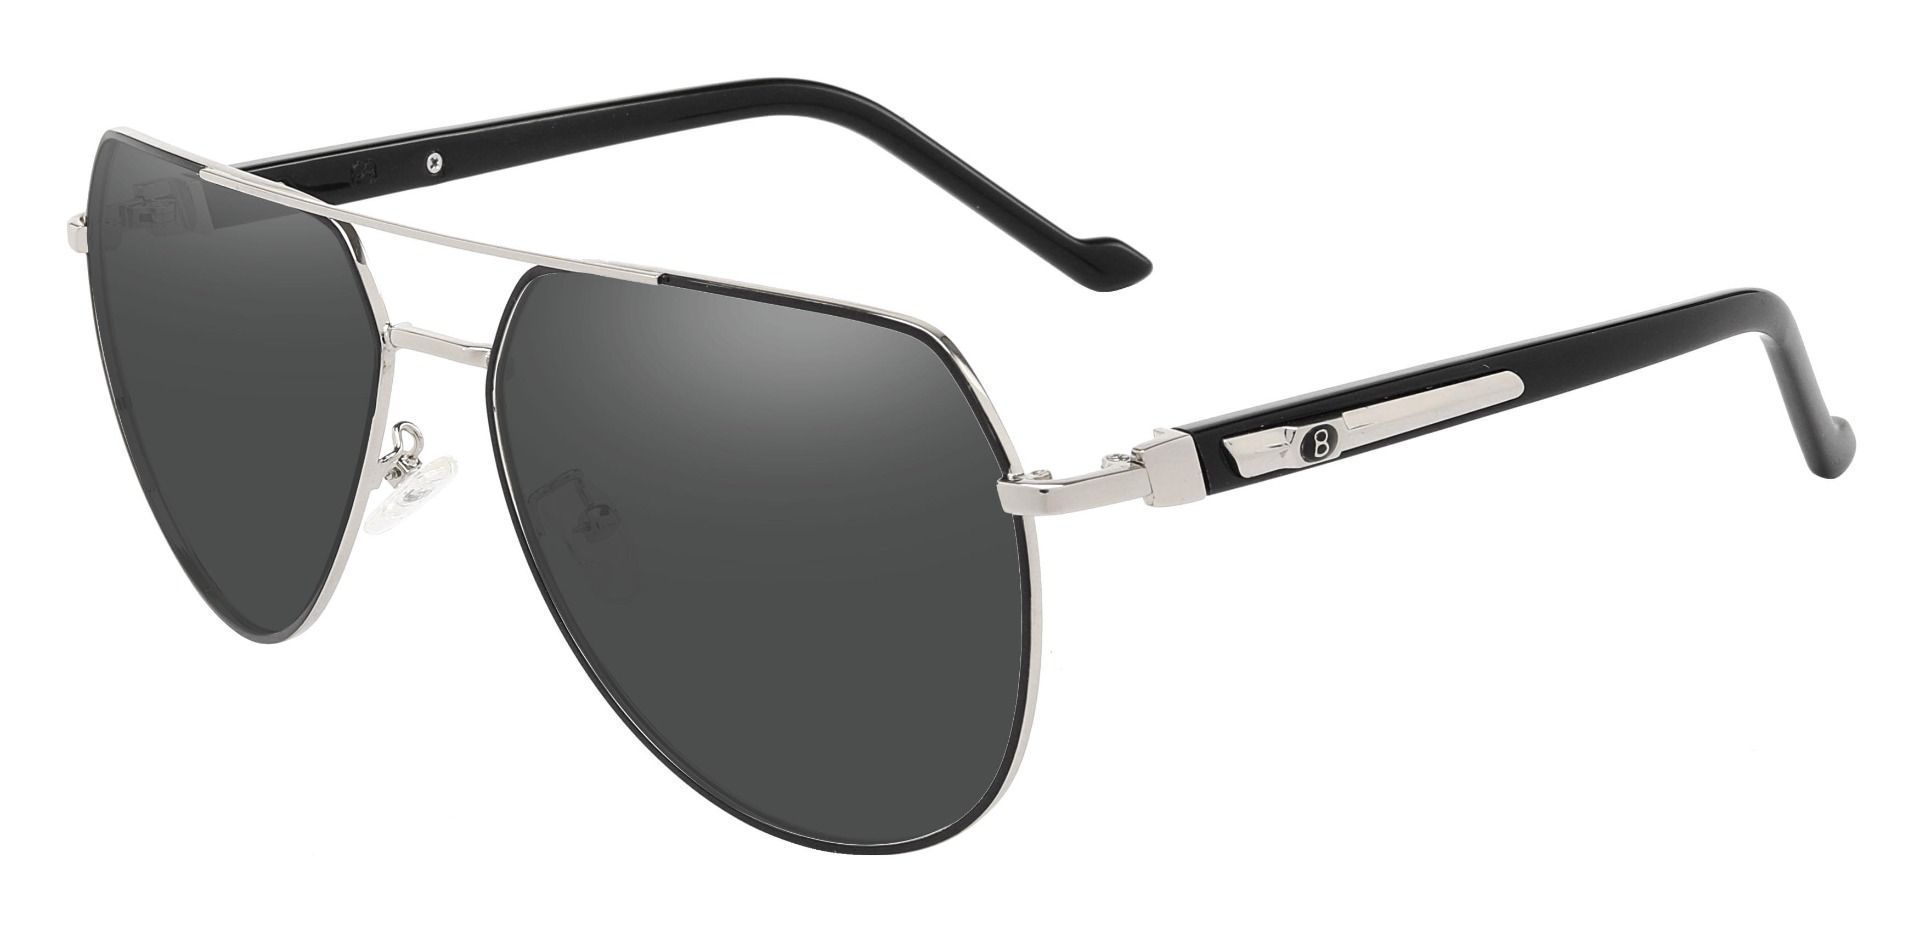 Wright Aviator Single Vision Sunglasses - Black Frame With Gray Lenses